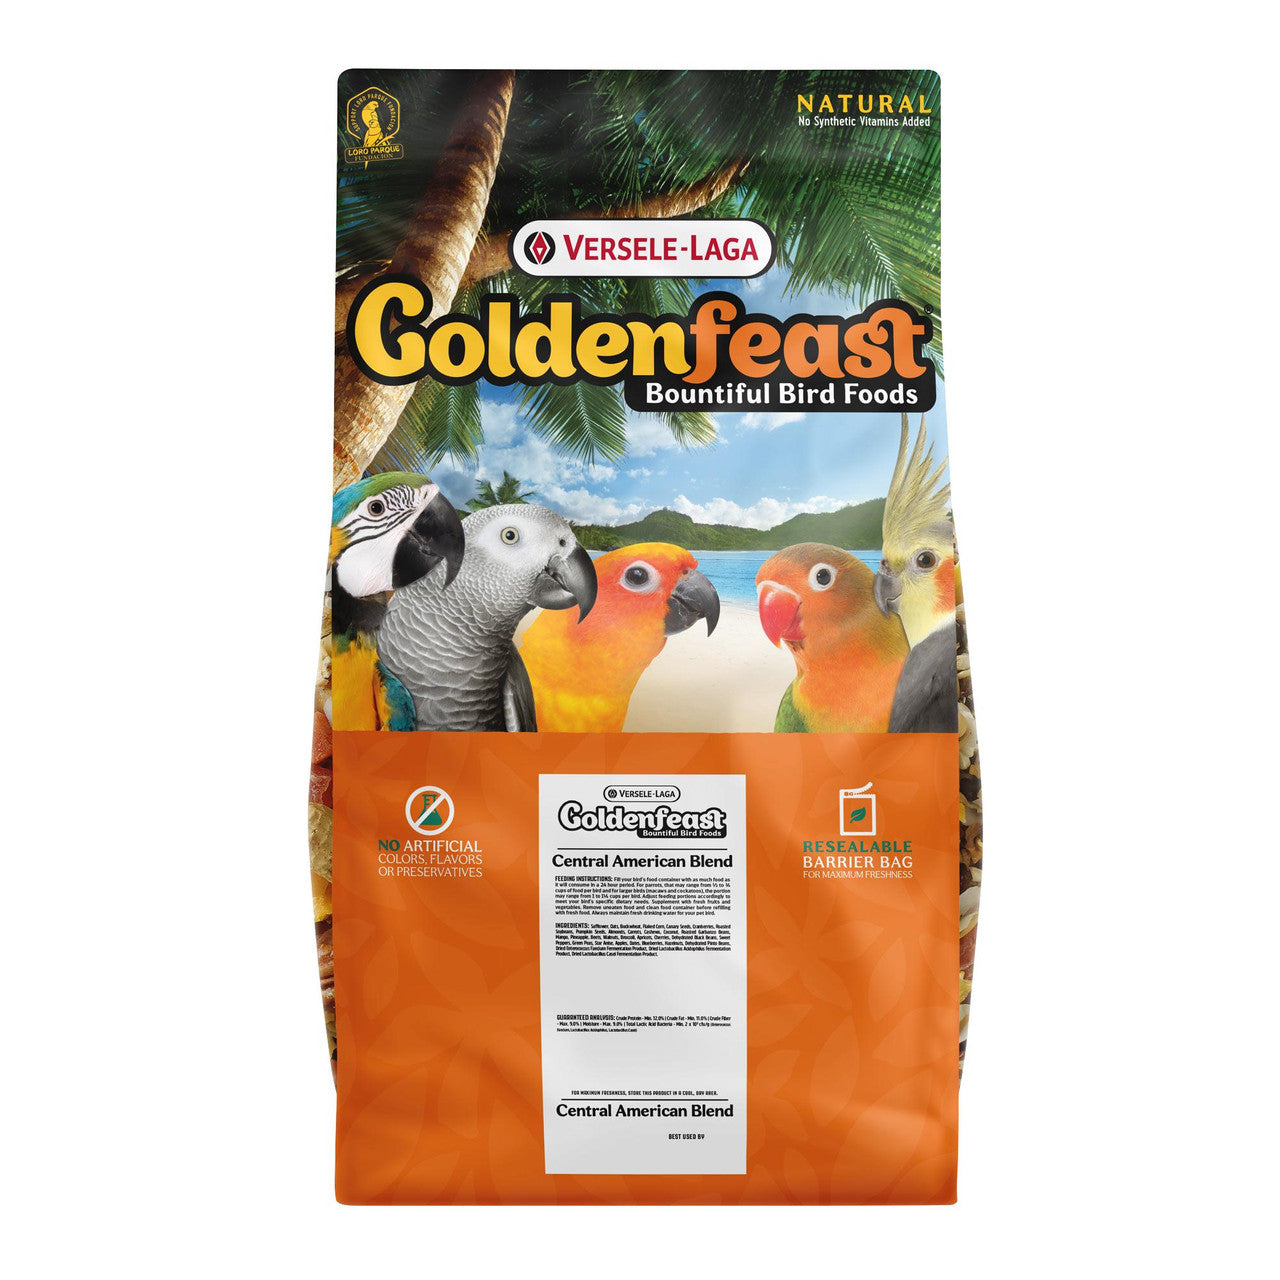 Goldenfeast Central American Blend Bird Food 17.5 lb 046706822171